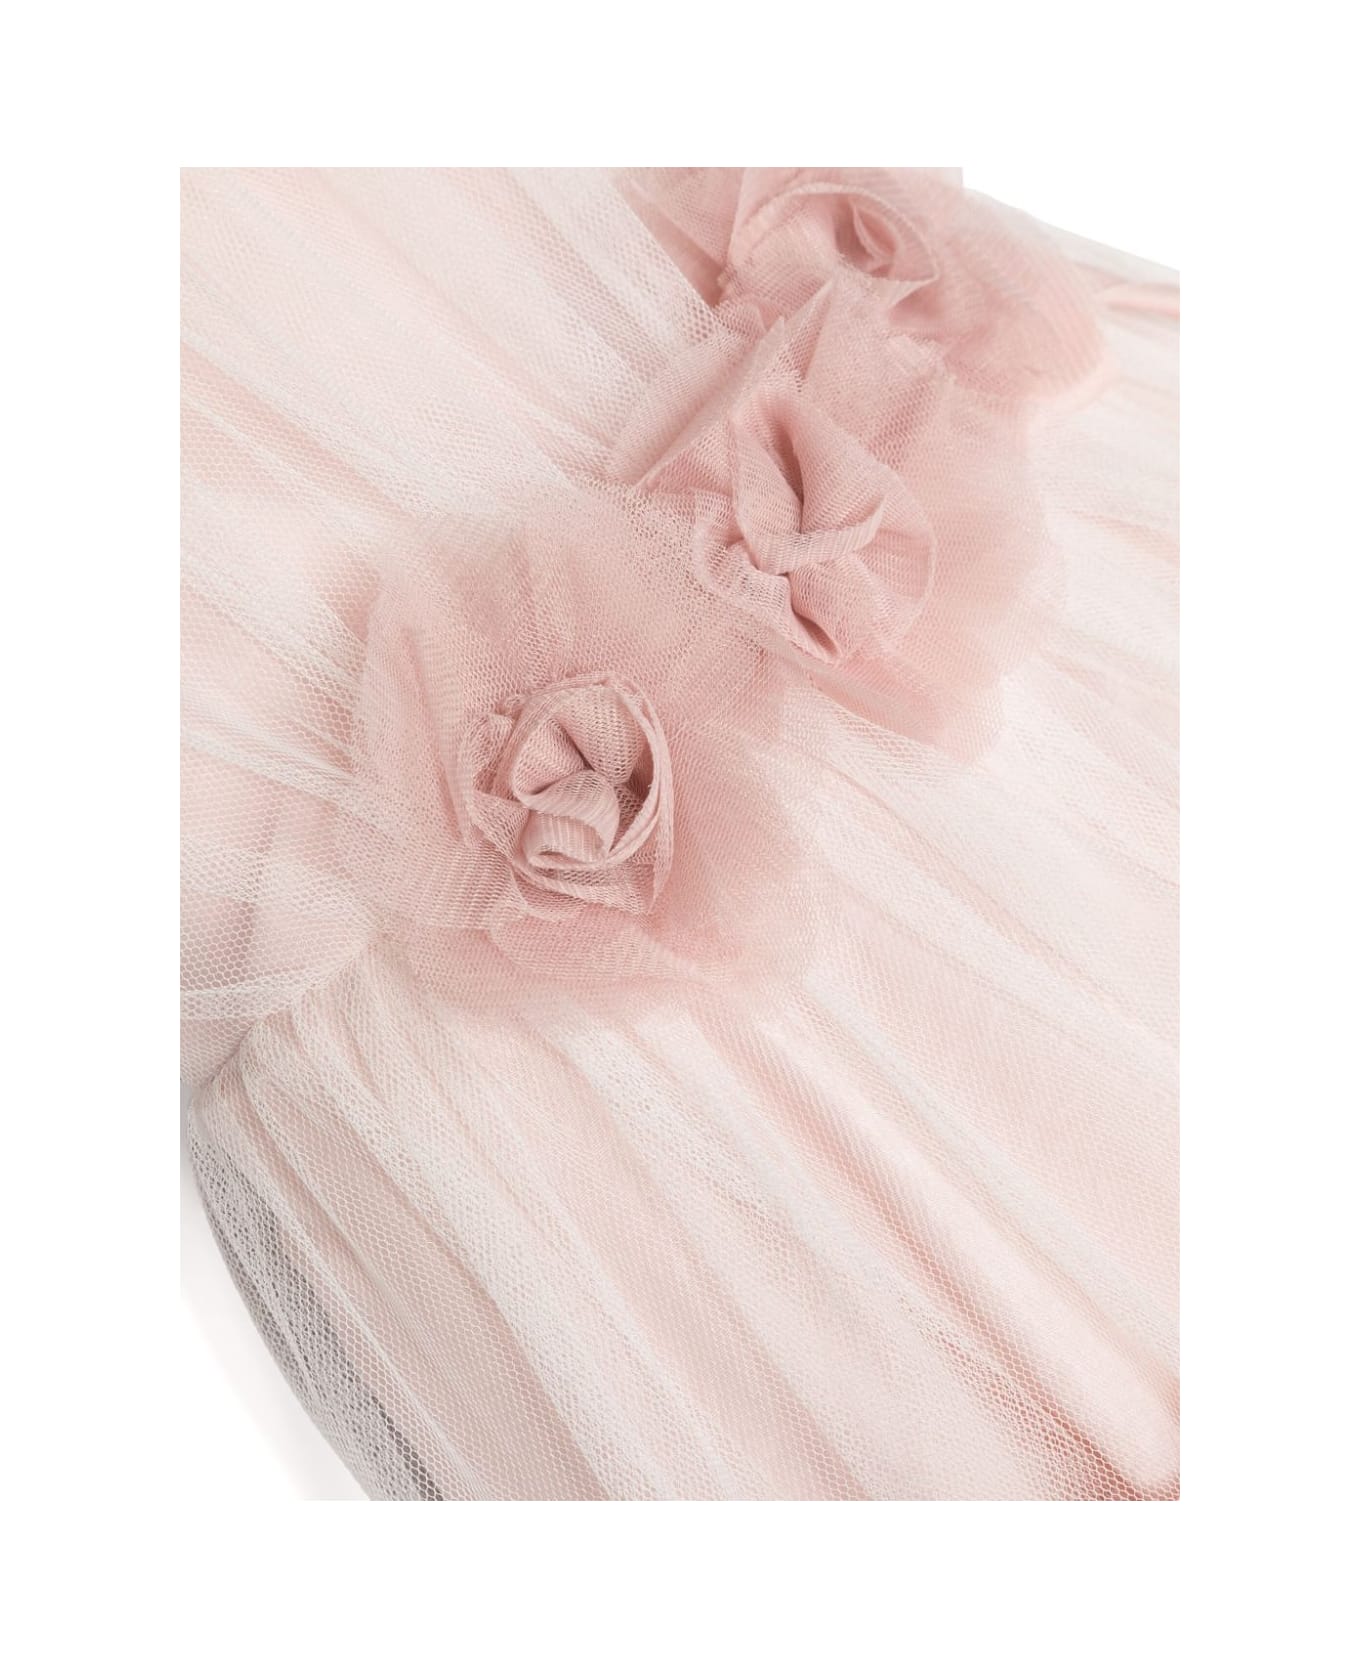 Amaya Arzuaga Elegant Sleeveless Dress - Pink